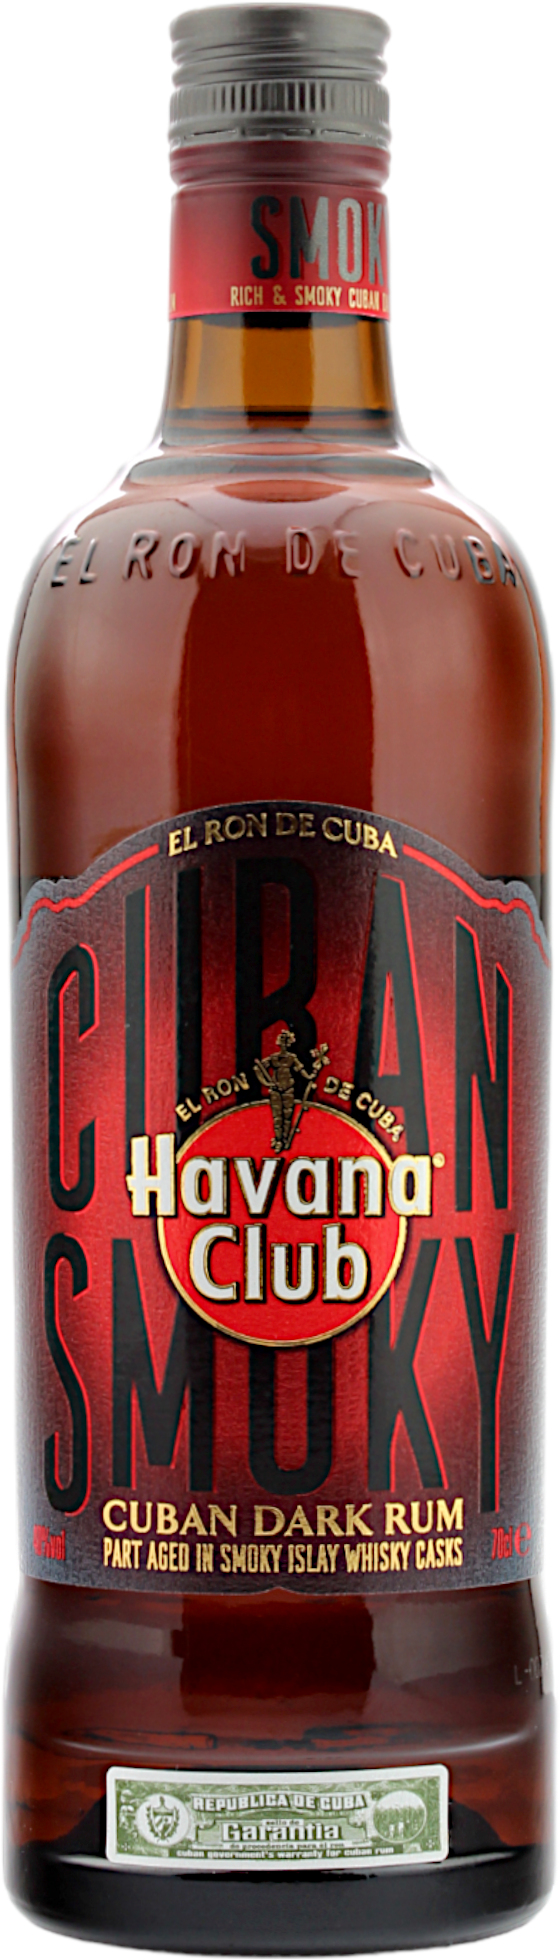 Havana Club Smoky Cuban Dark Rum 40.0% 0,7l